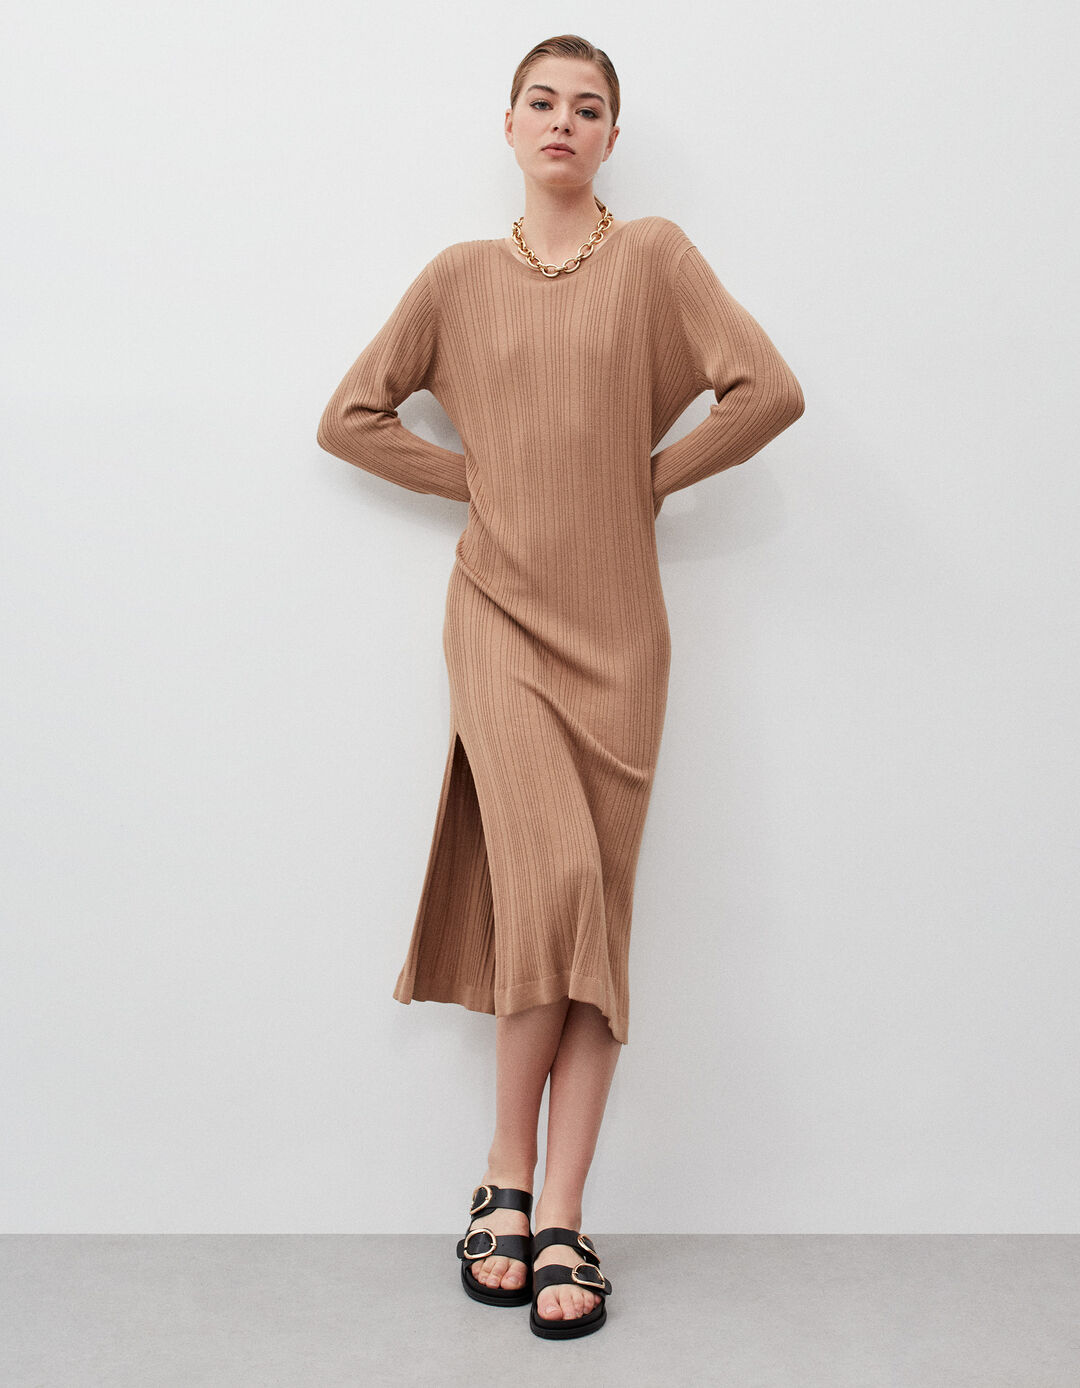 Ribbed Knit Dress, Women, Light Brown